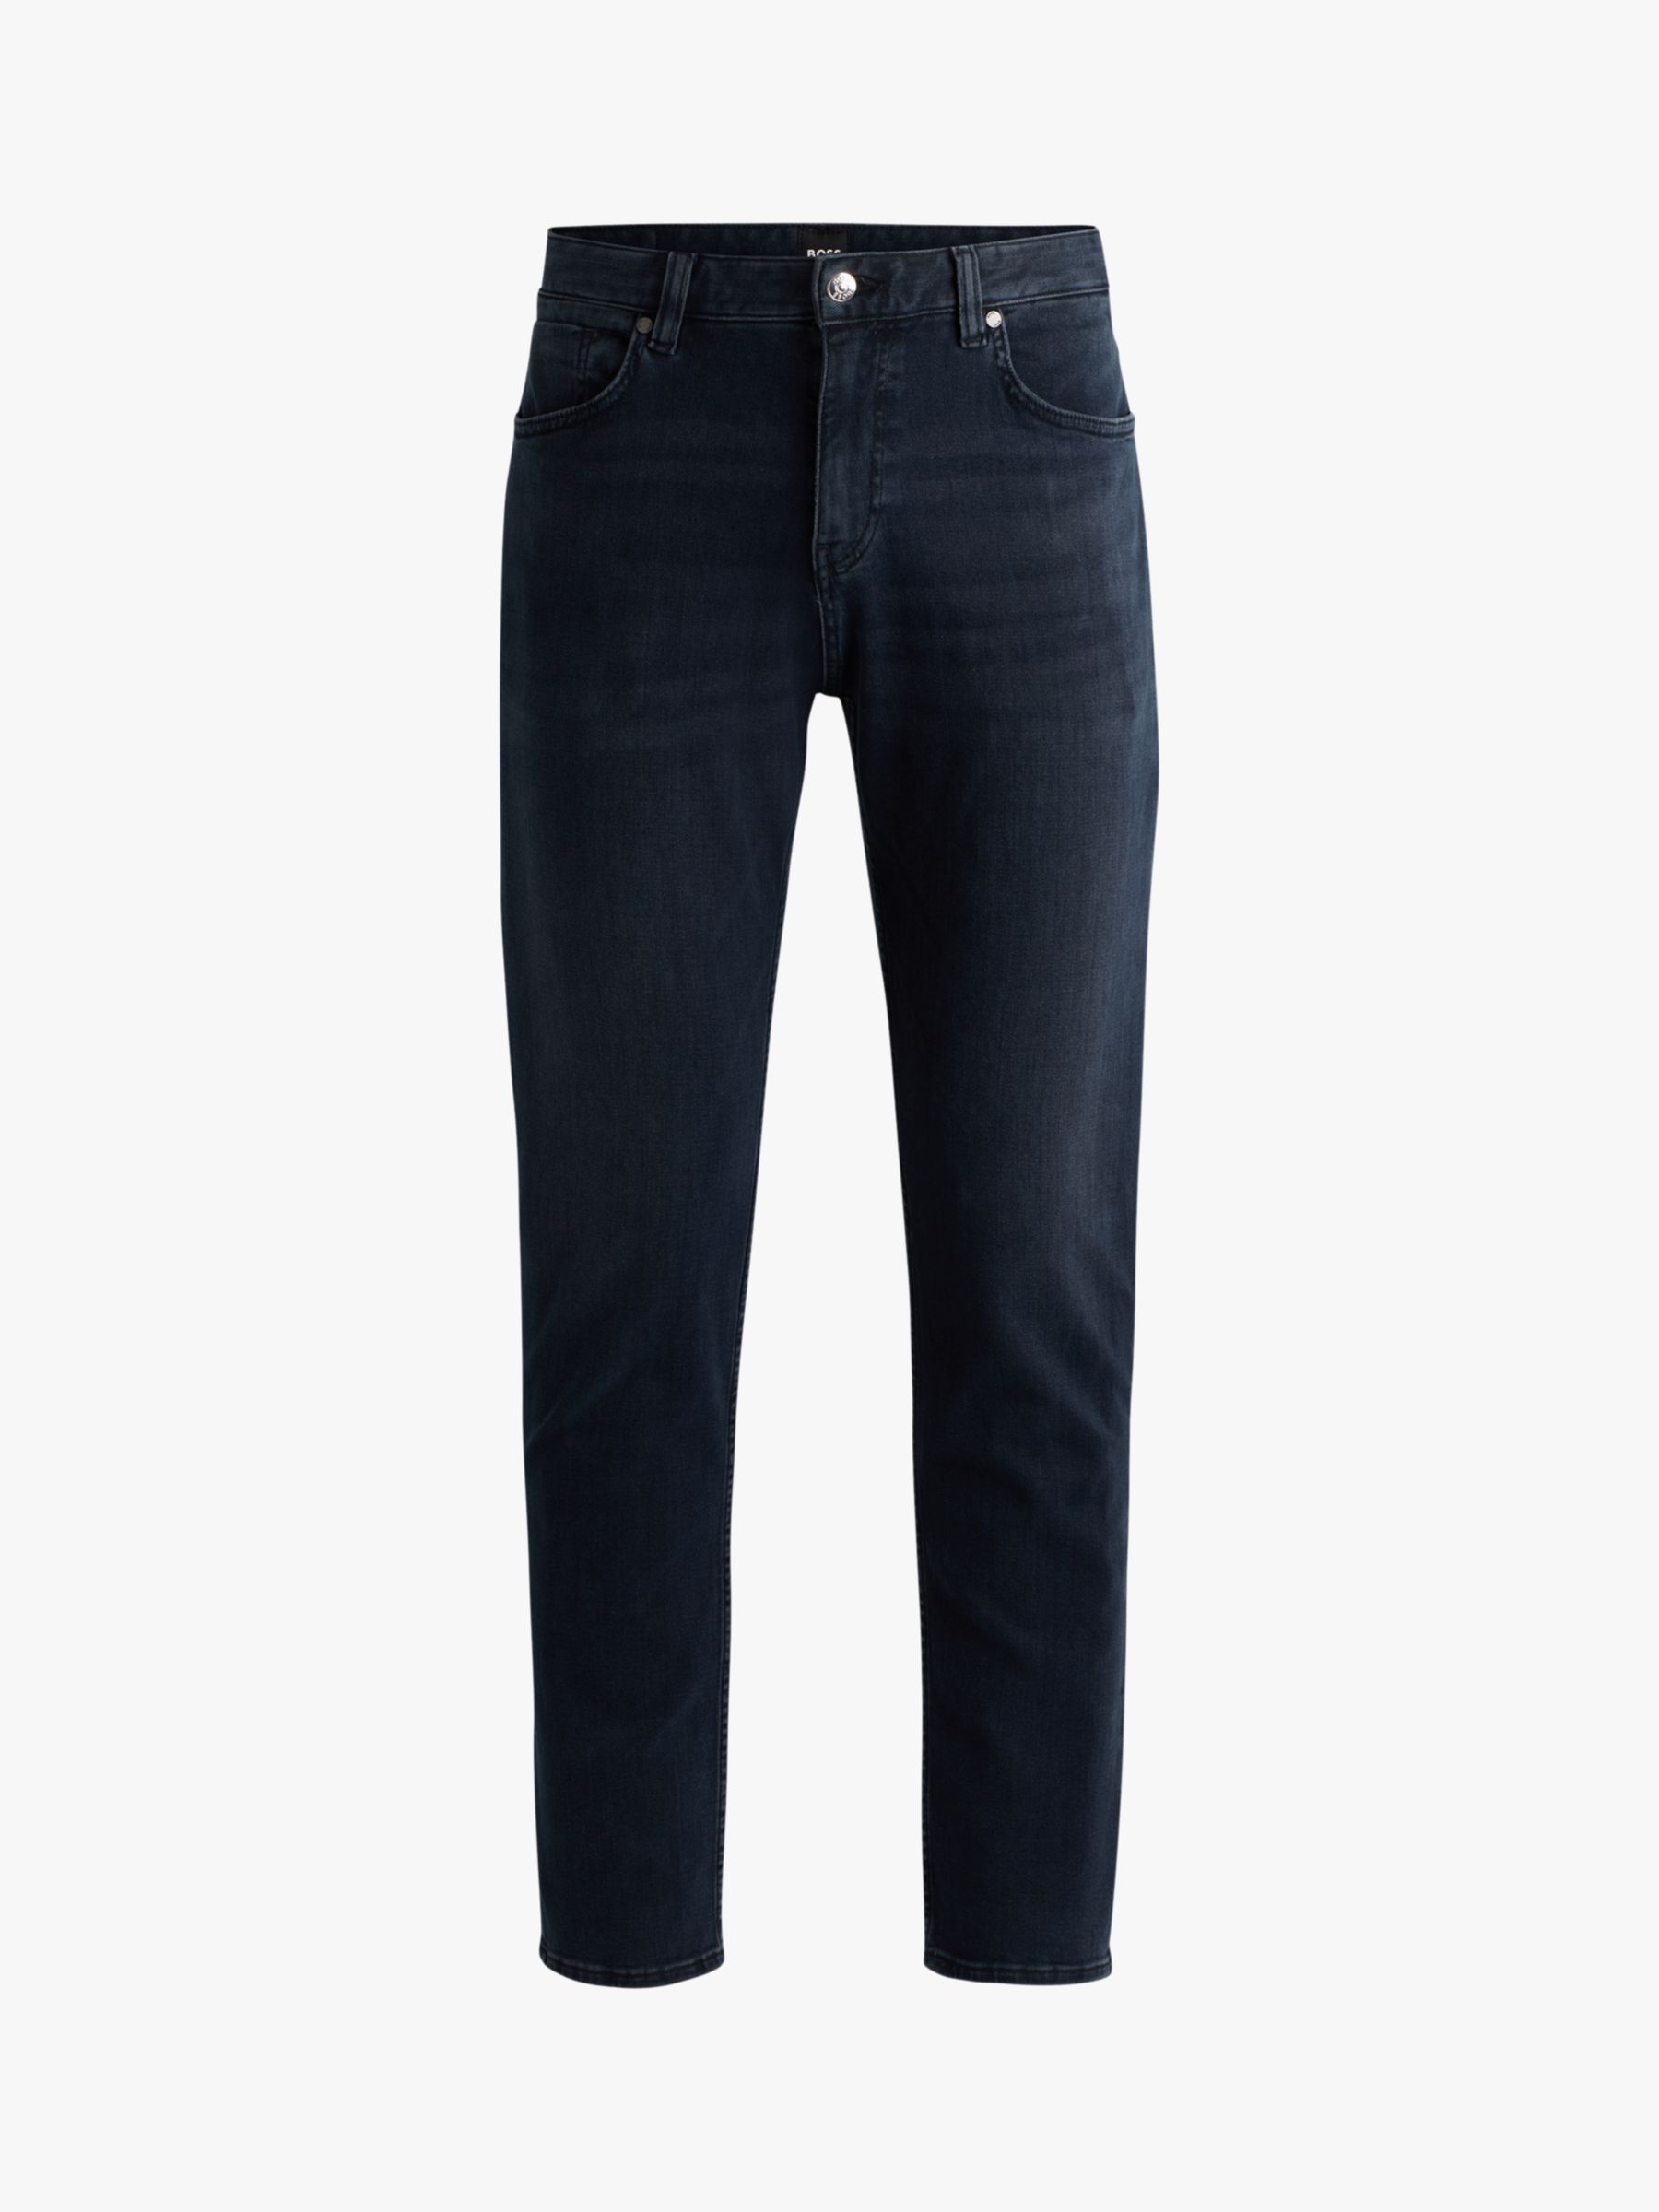 BOSS Maine Straight Fit Jeans, Dark Blue, 33R